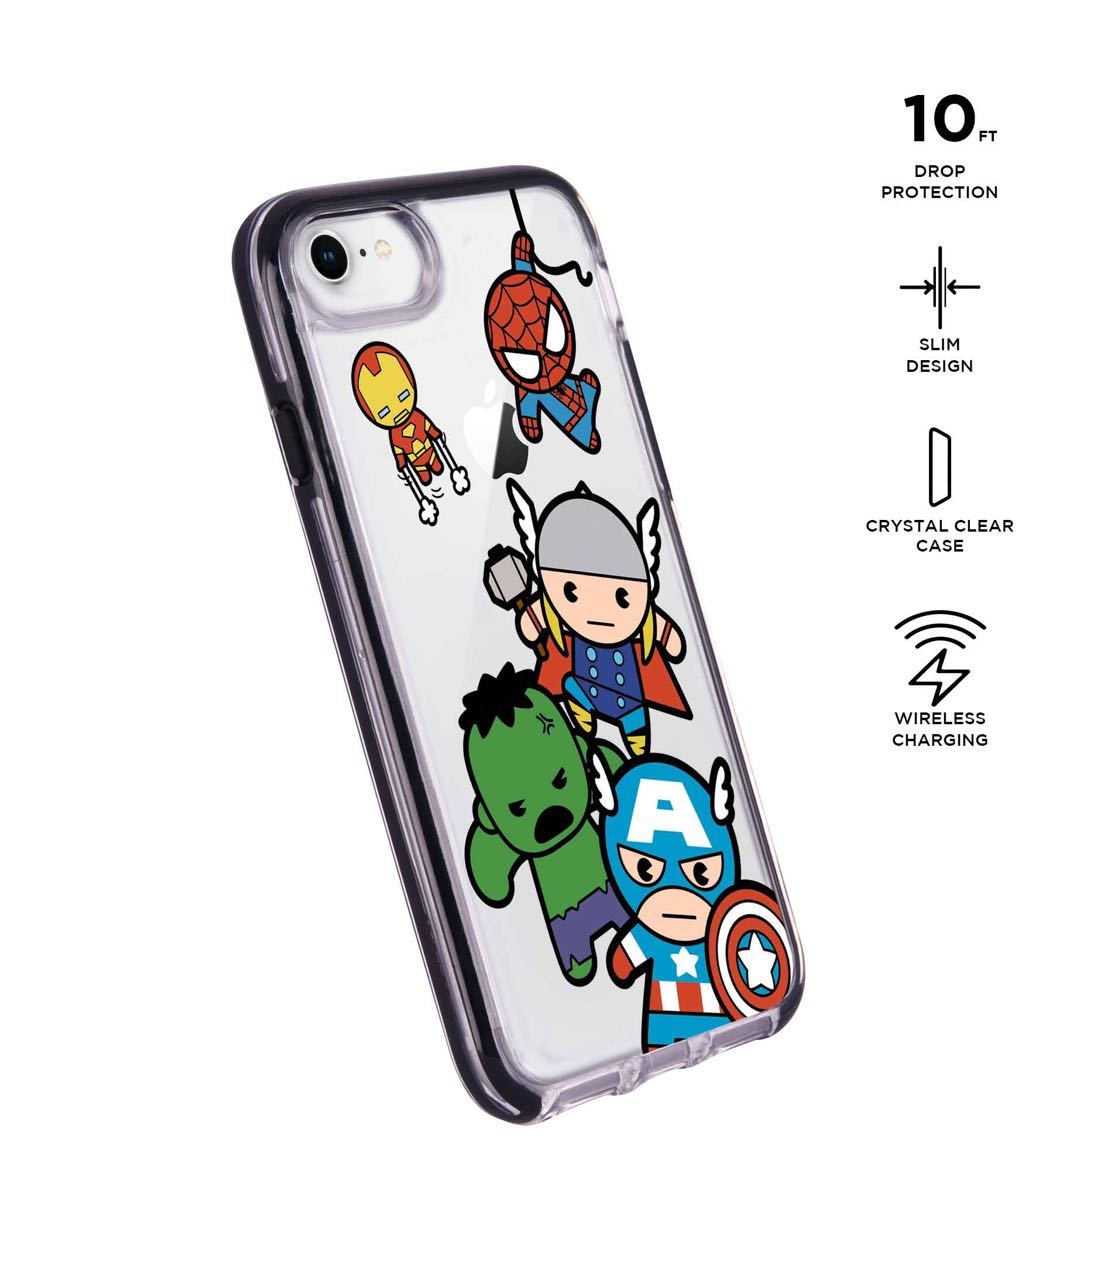 Kawaii Art Marvel Comics - Extreme Phone Case for iPhone 8